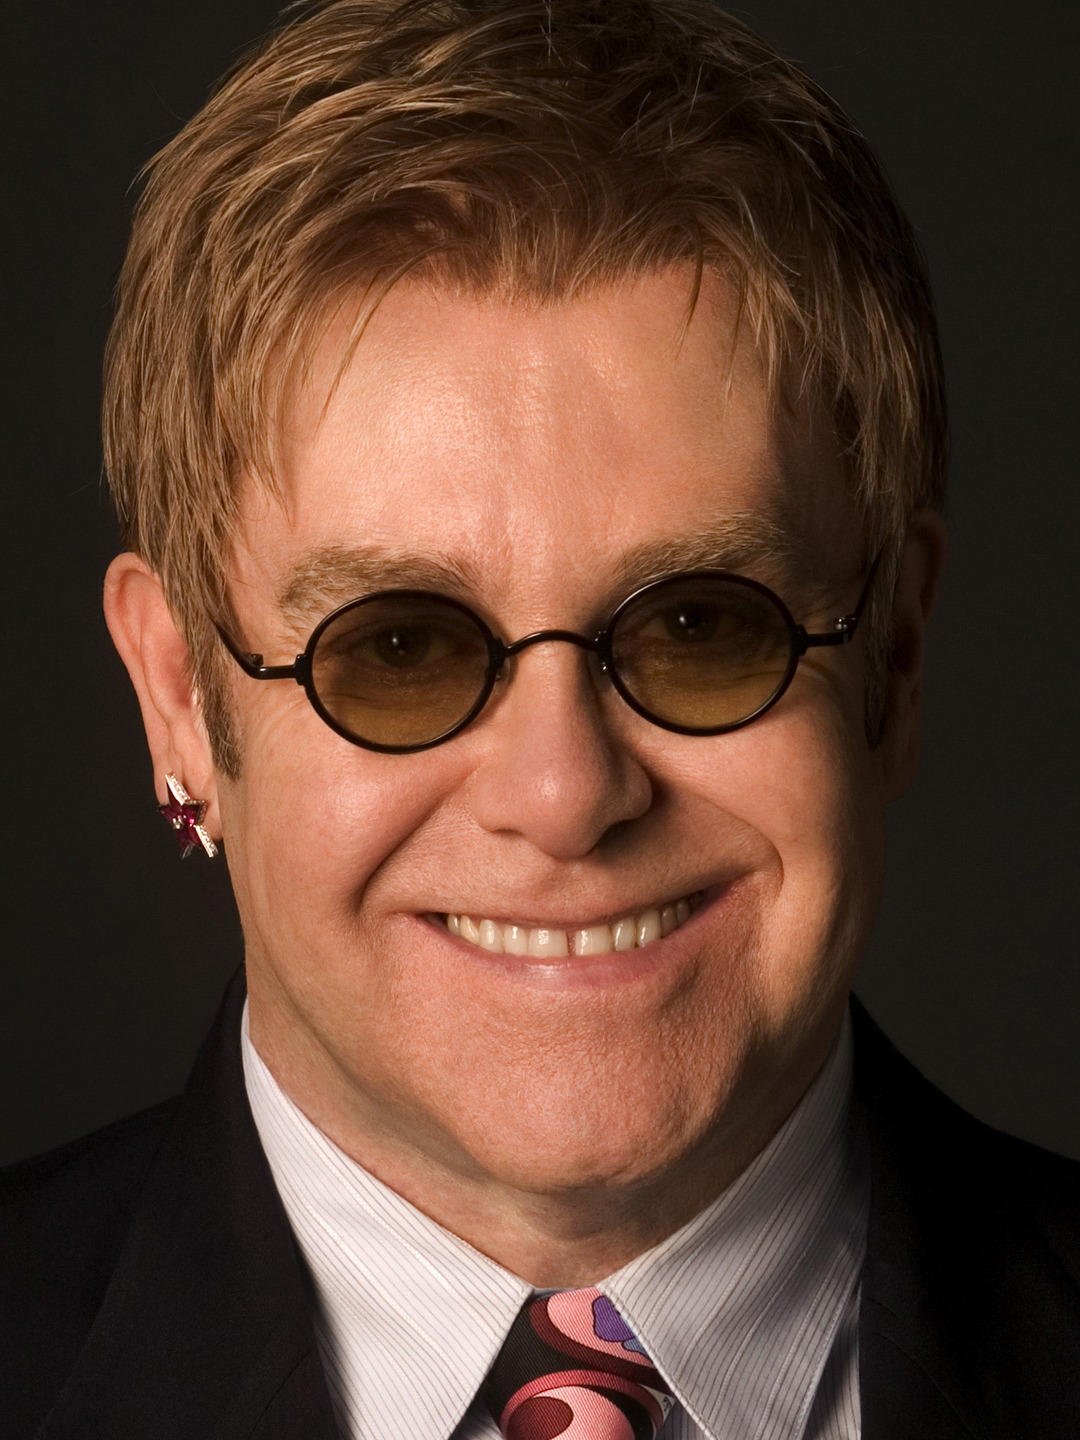 Elton John where did he study